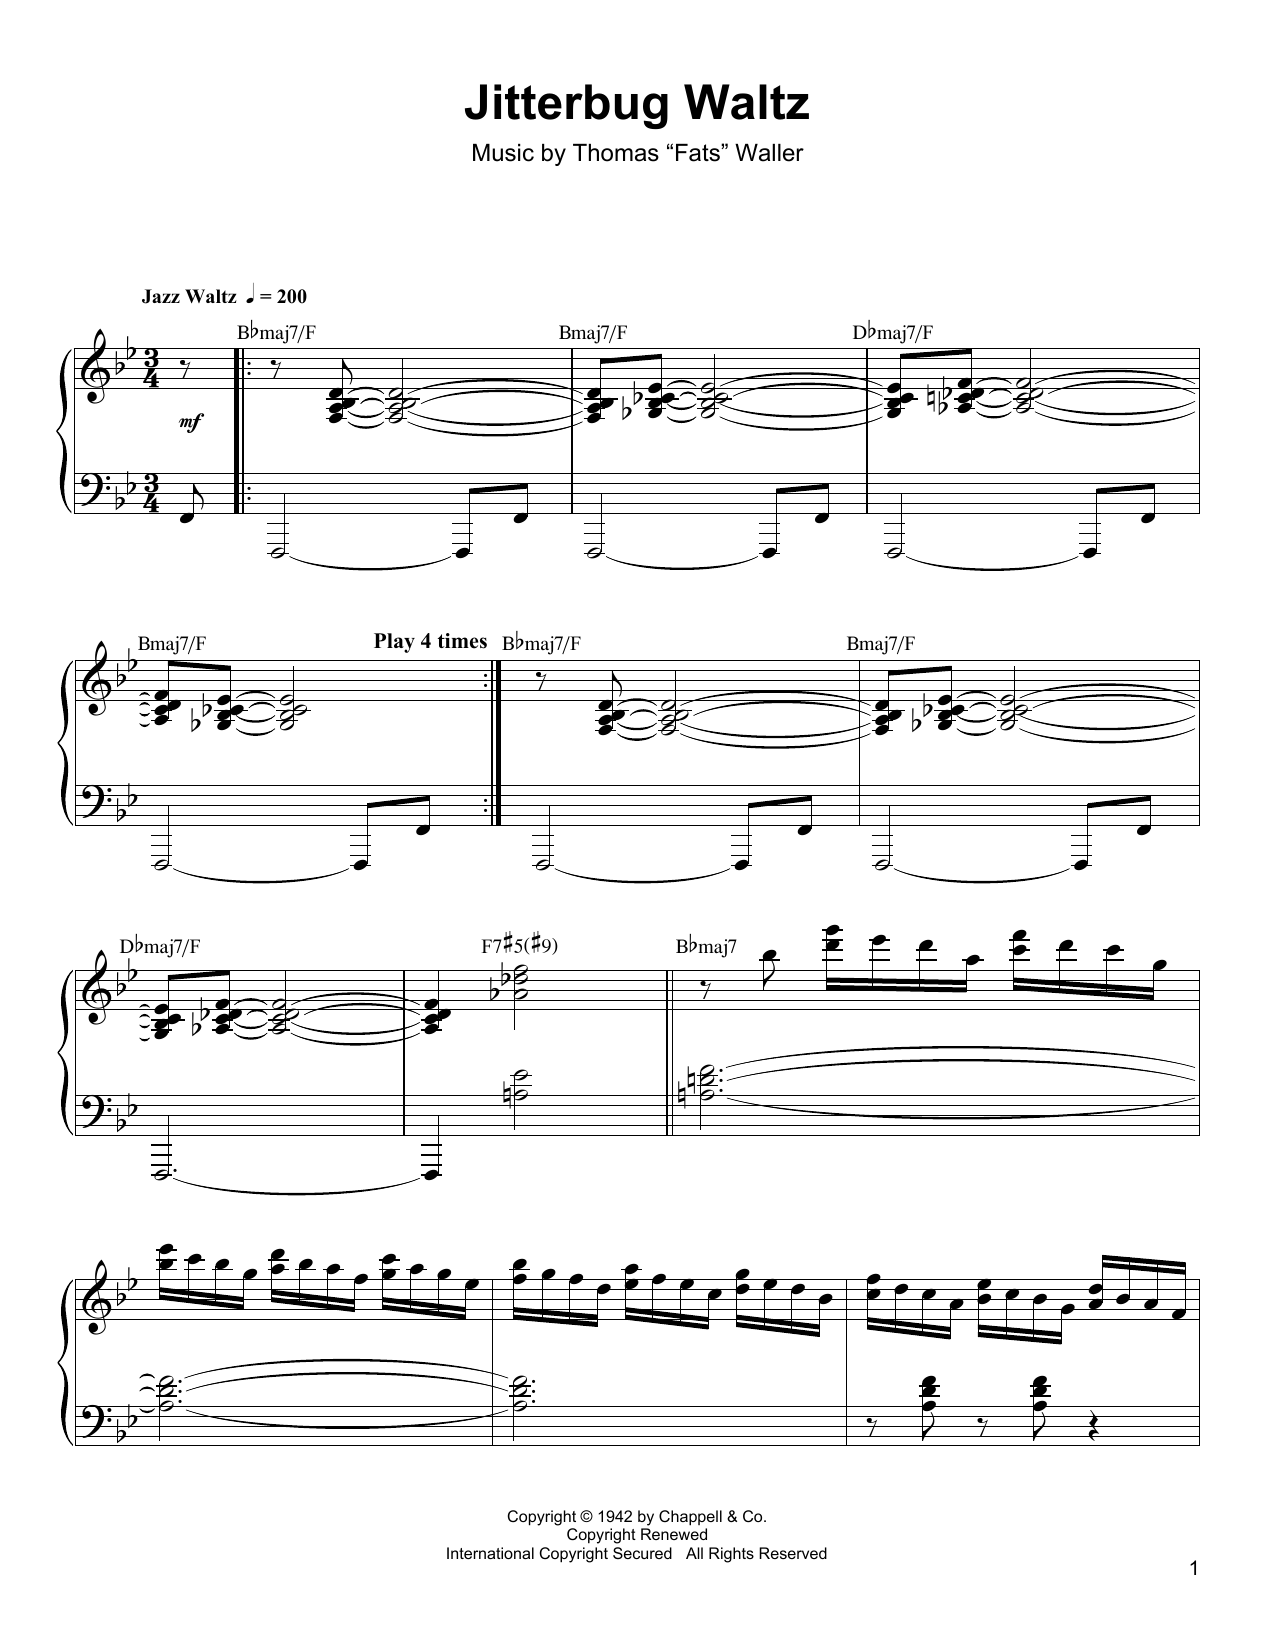 Oscar Peterson Jitterbug Waltz Sheet Music Notes & Chords for Piano Transcription - Download or Print PDF